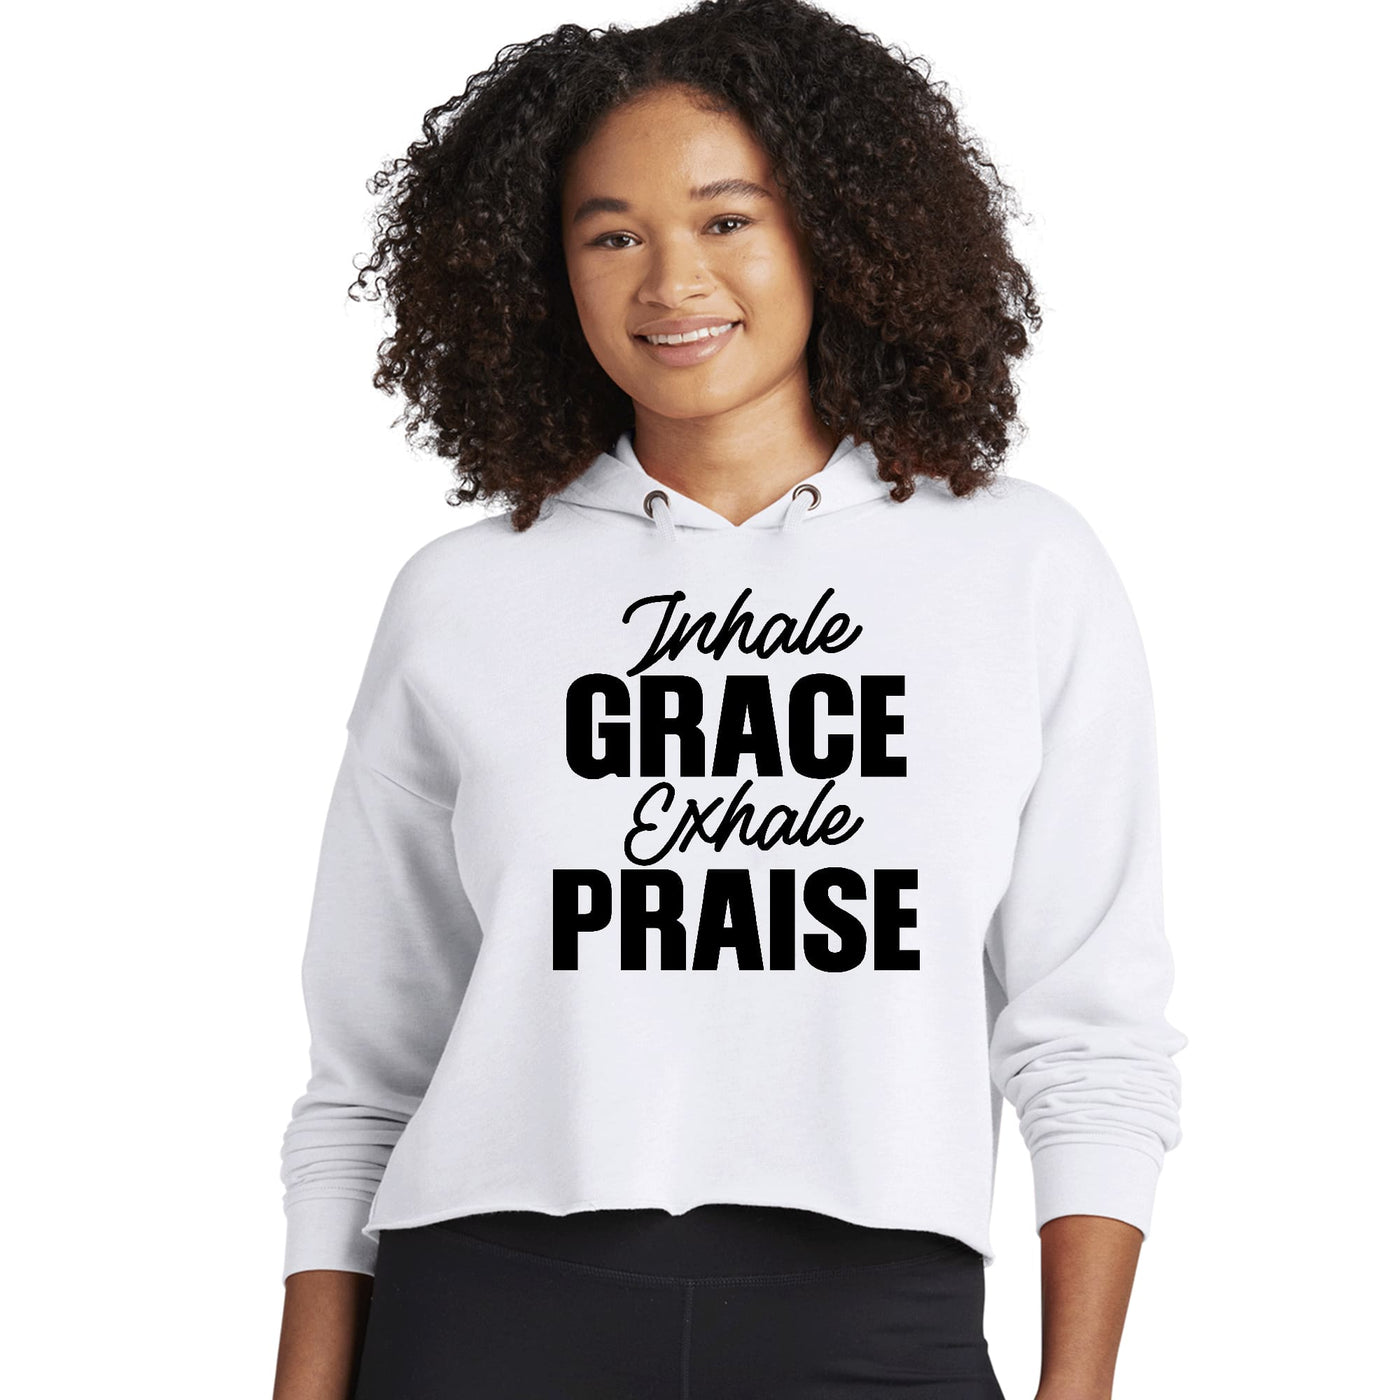 Womens Cropped Performance Hoodie Inhale Grace Exhale Praise Black - Womens